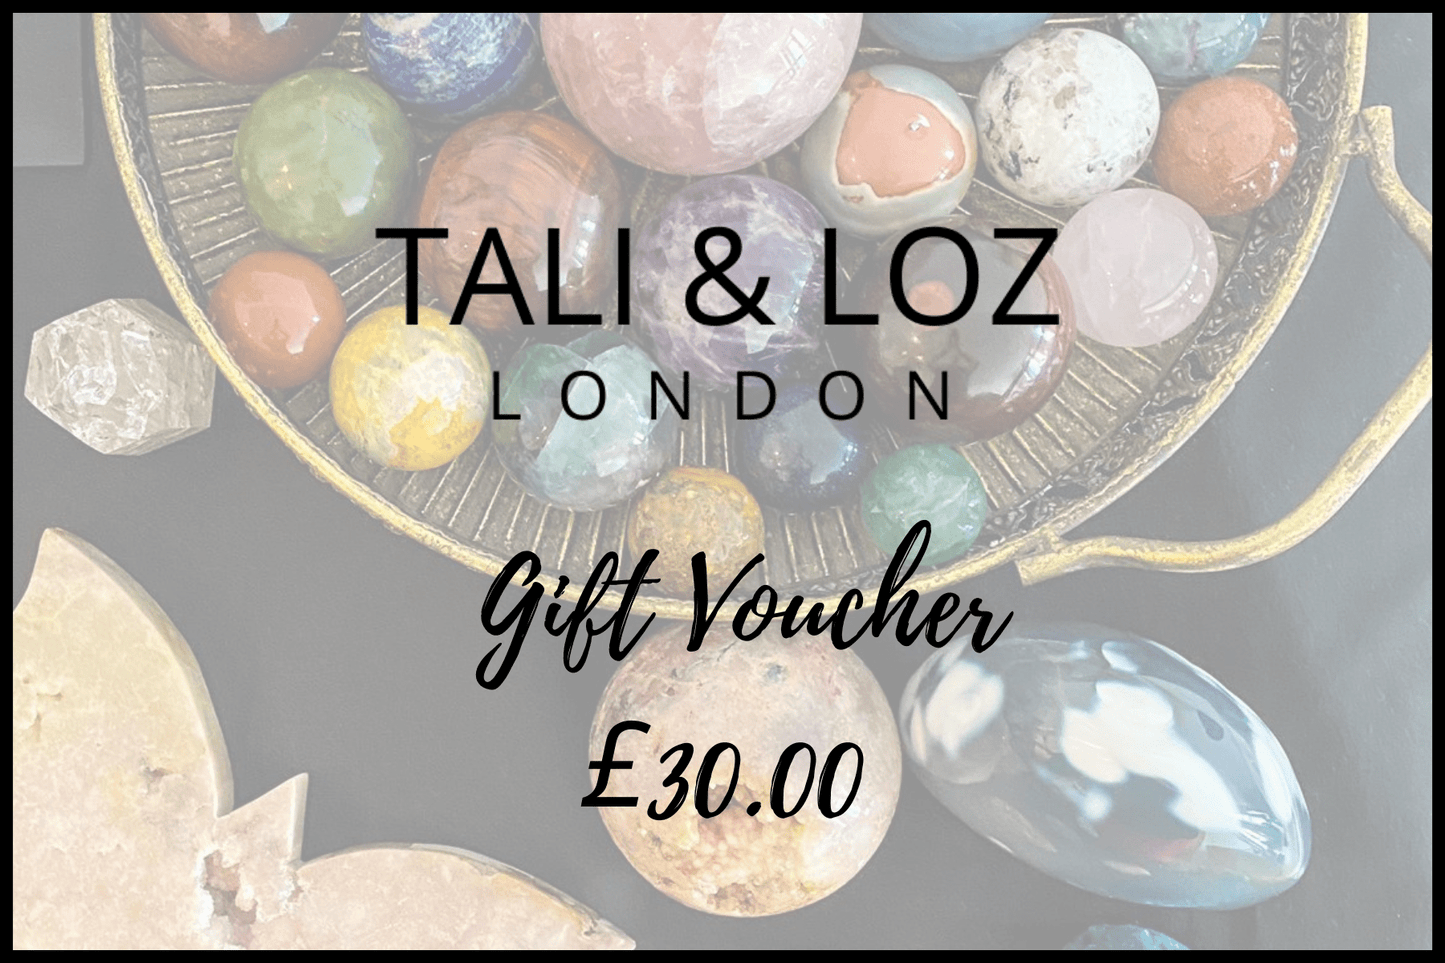 Gift Voucher Gift Cards £30.00 Tali & Loz